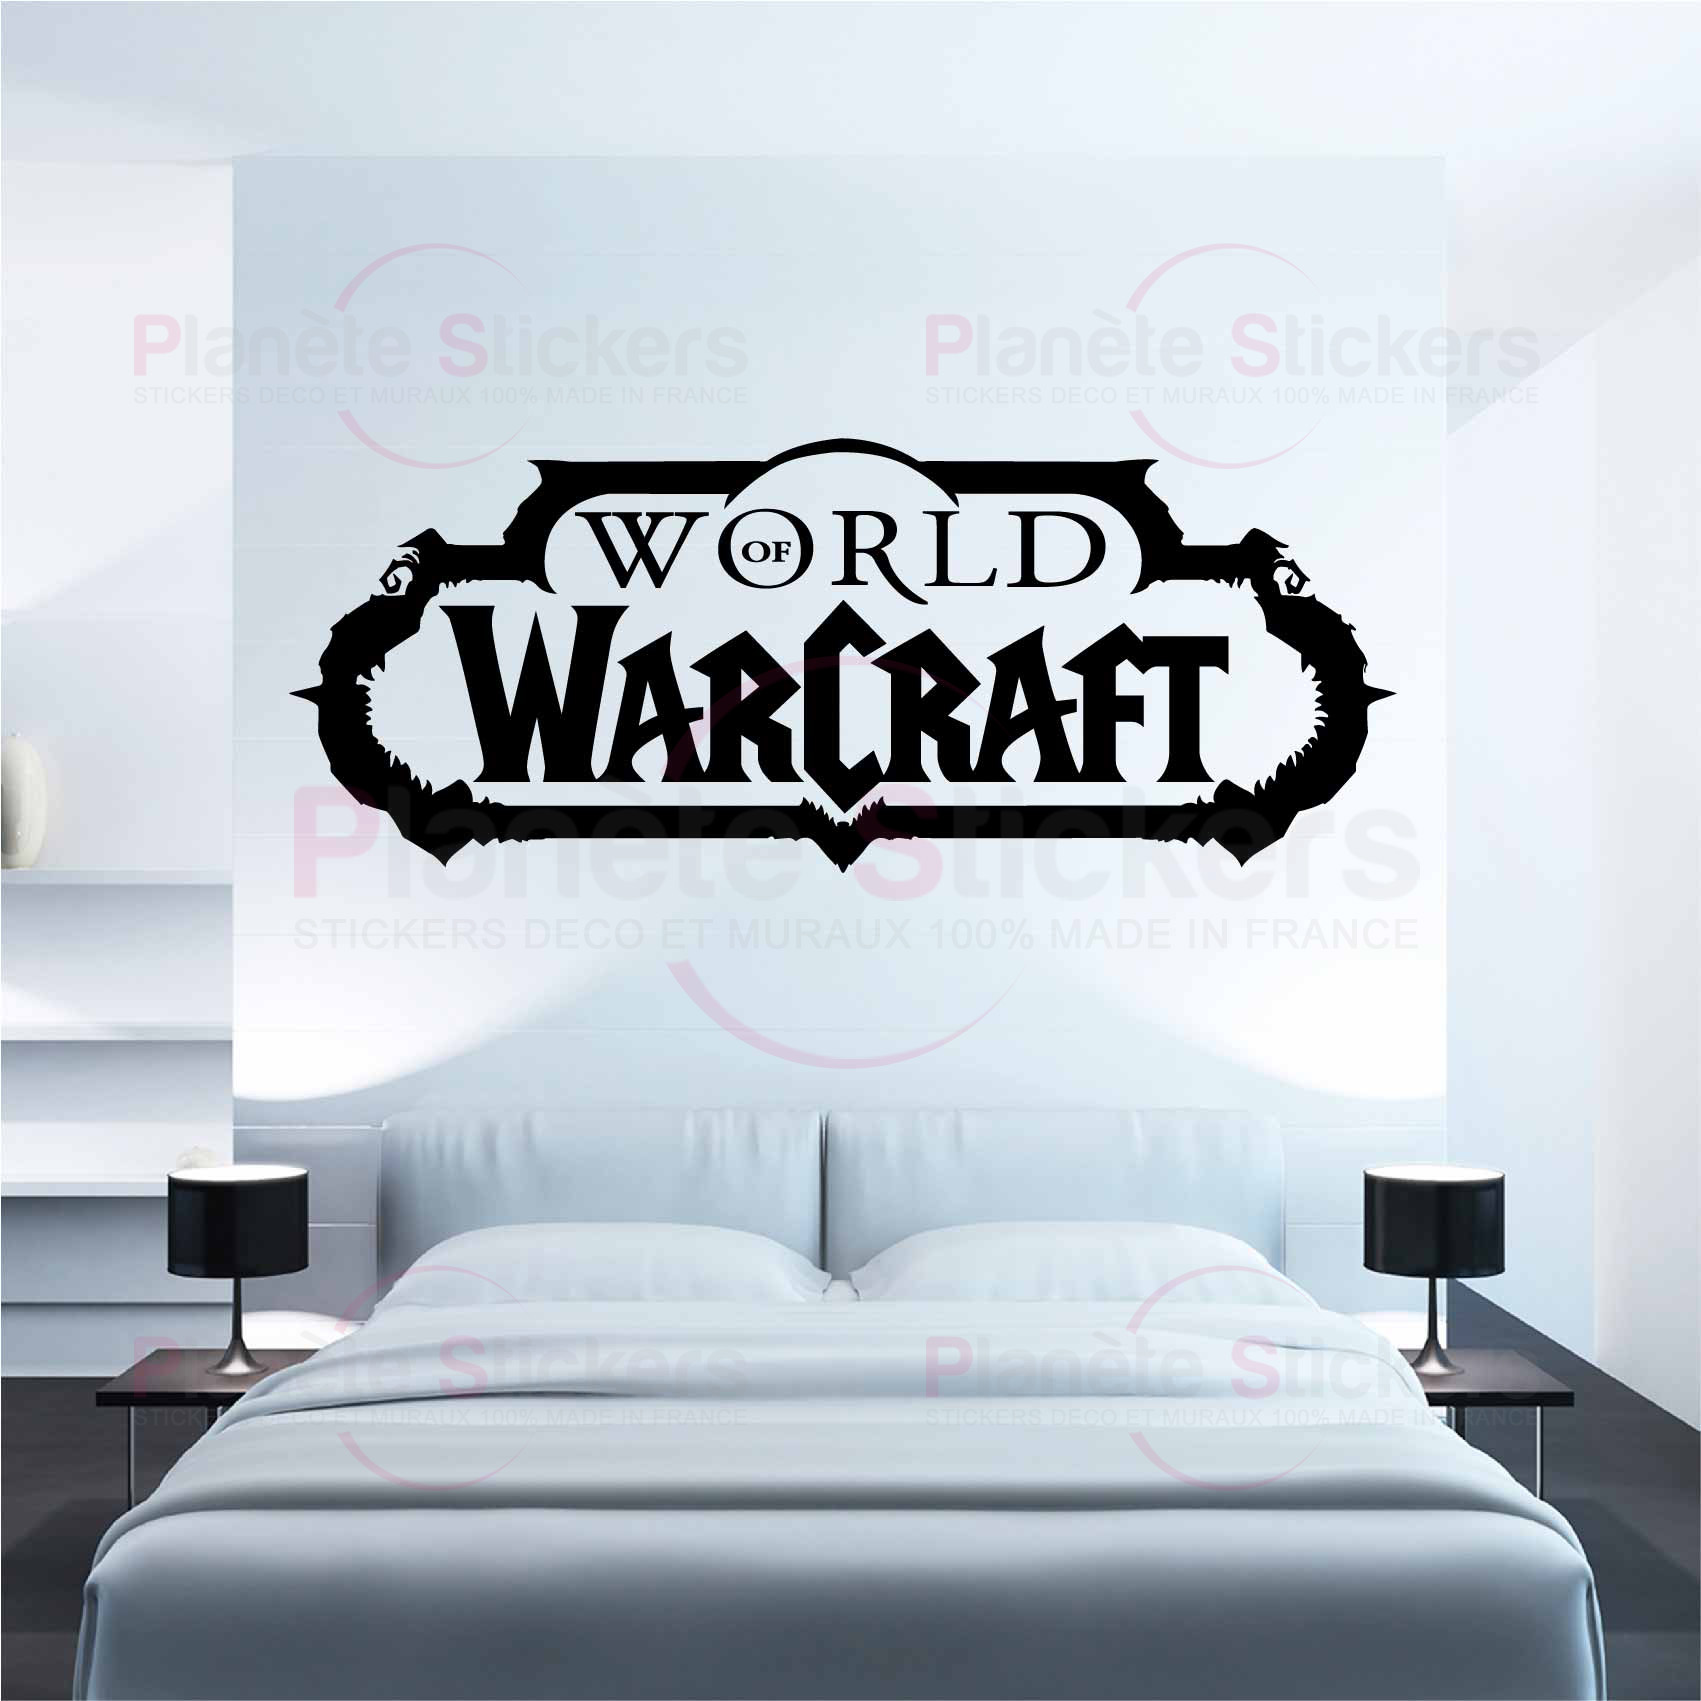 stickers-world-of-warcraft-fan-art-ref21wow-stickers-muraux-world-of-warcraft-autocollant-mural-jeux-video-sticker-gamer-deco-gaming-salon-chambre